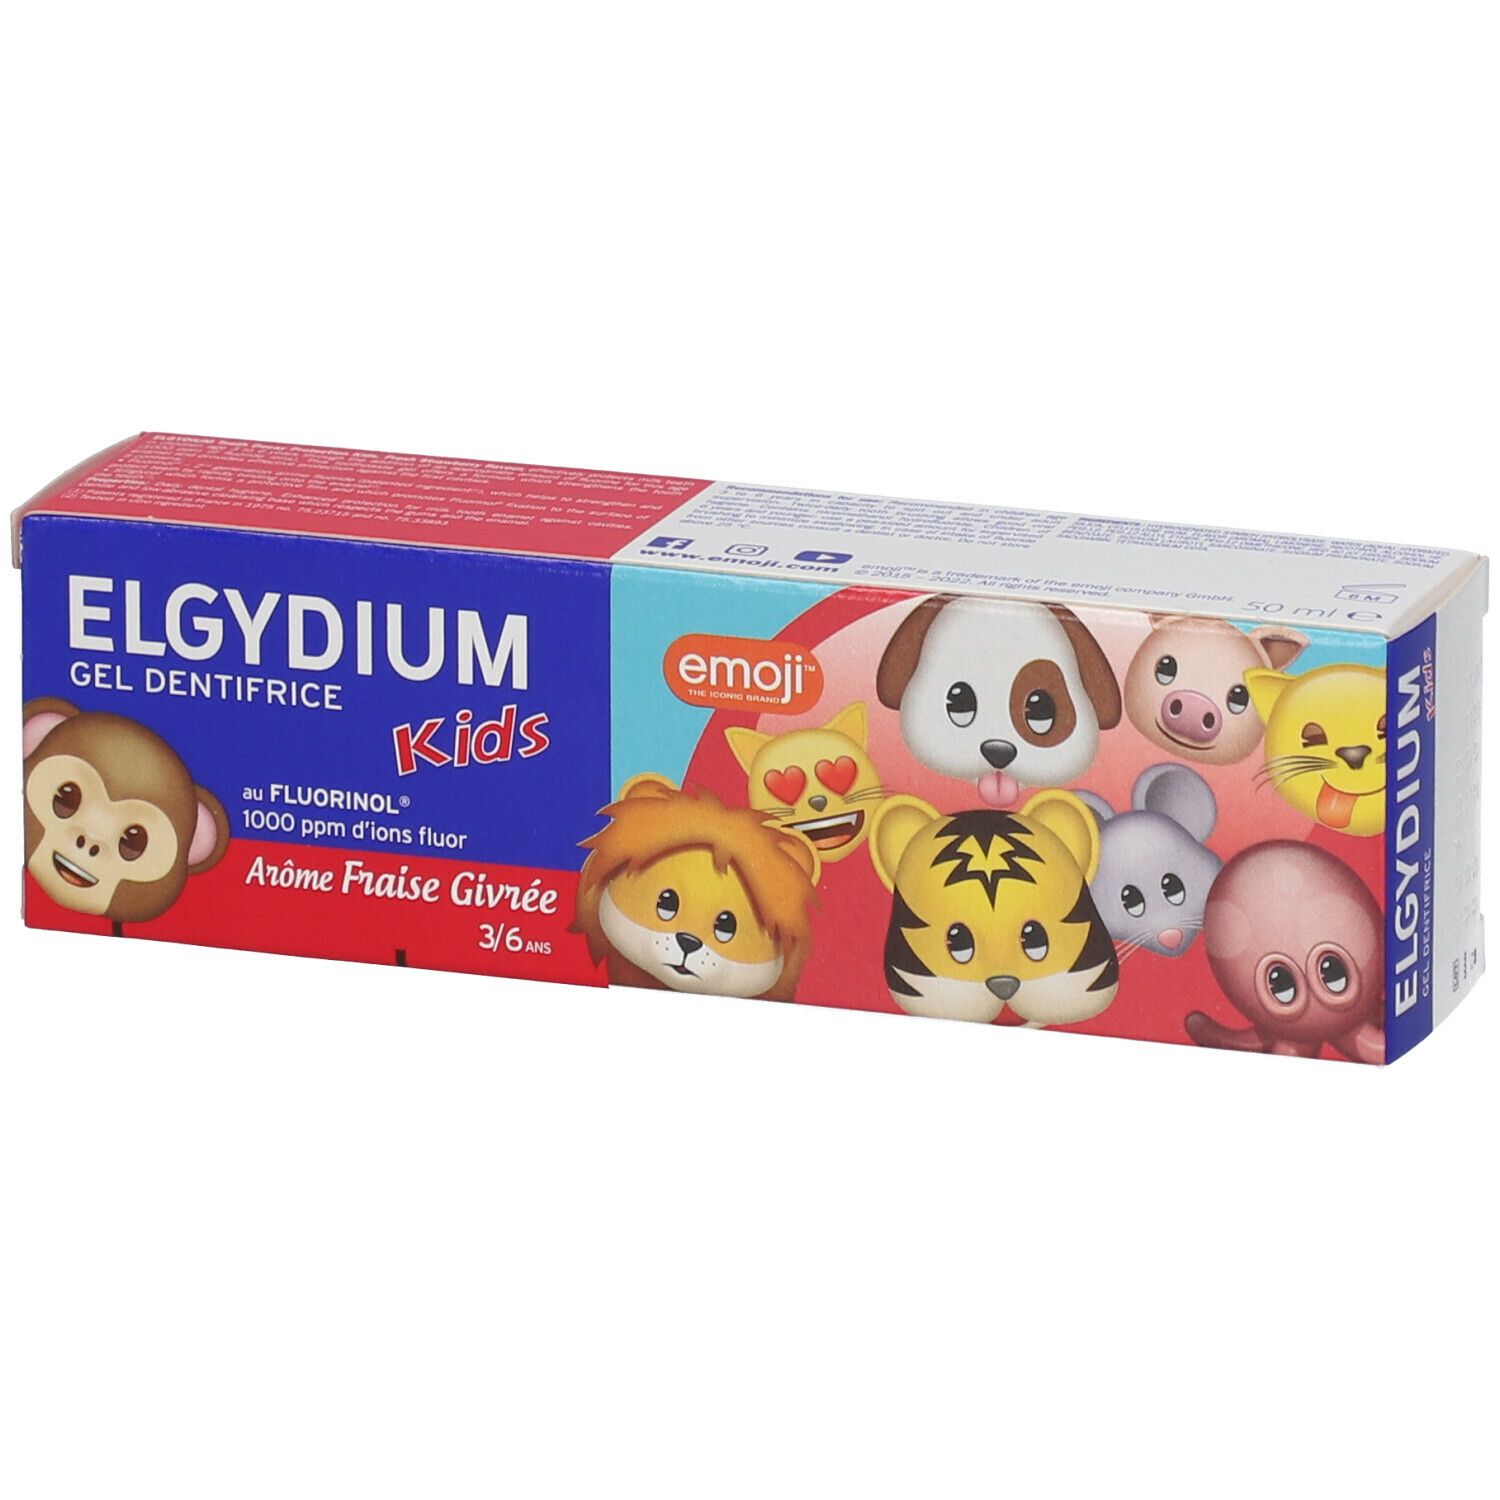 Elgydium Kids Gel Dentifrice Emoji Arôme Fraise Givrée 3-6 ans